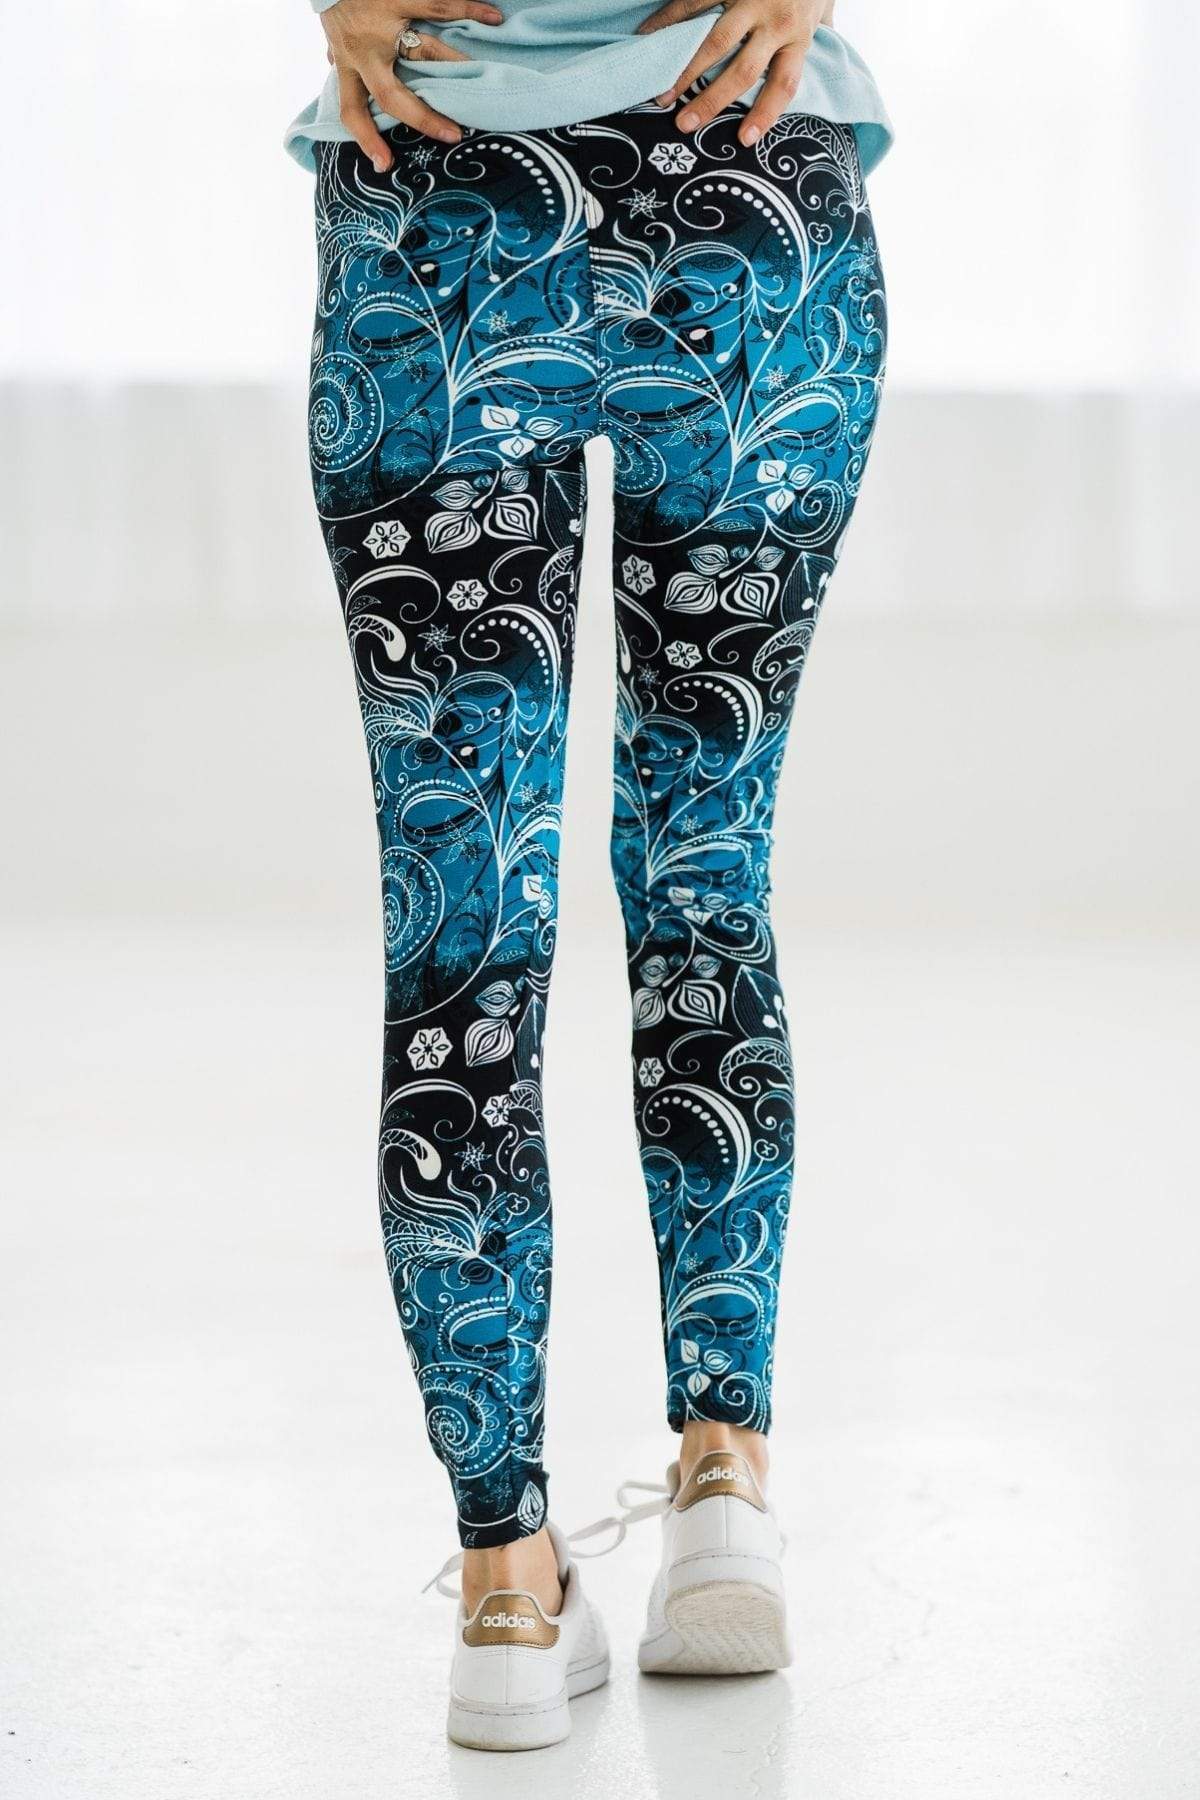 OxLaLa Leggings Blue Crush Blue Crush - Soft, comfortable leggings. Beautiful designs and patterns. 